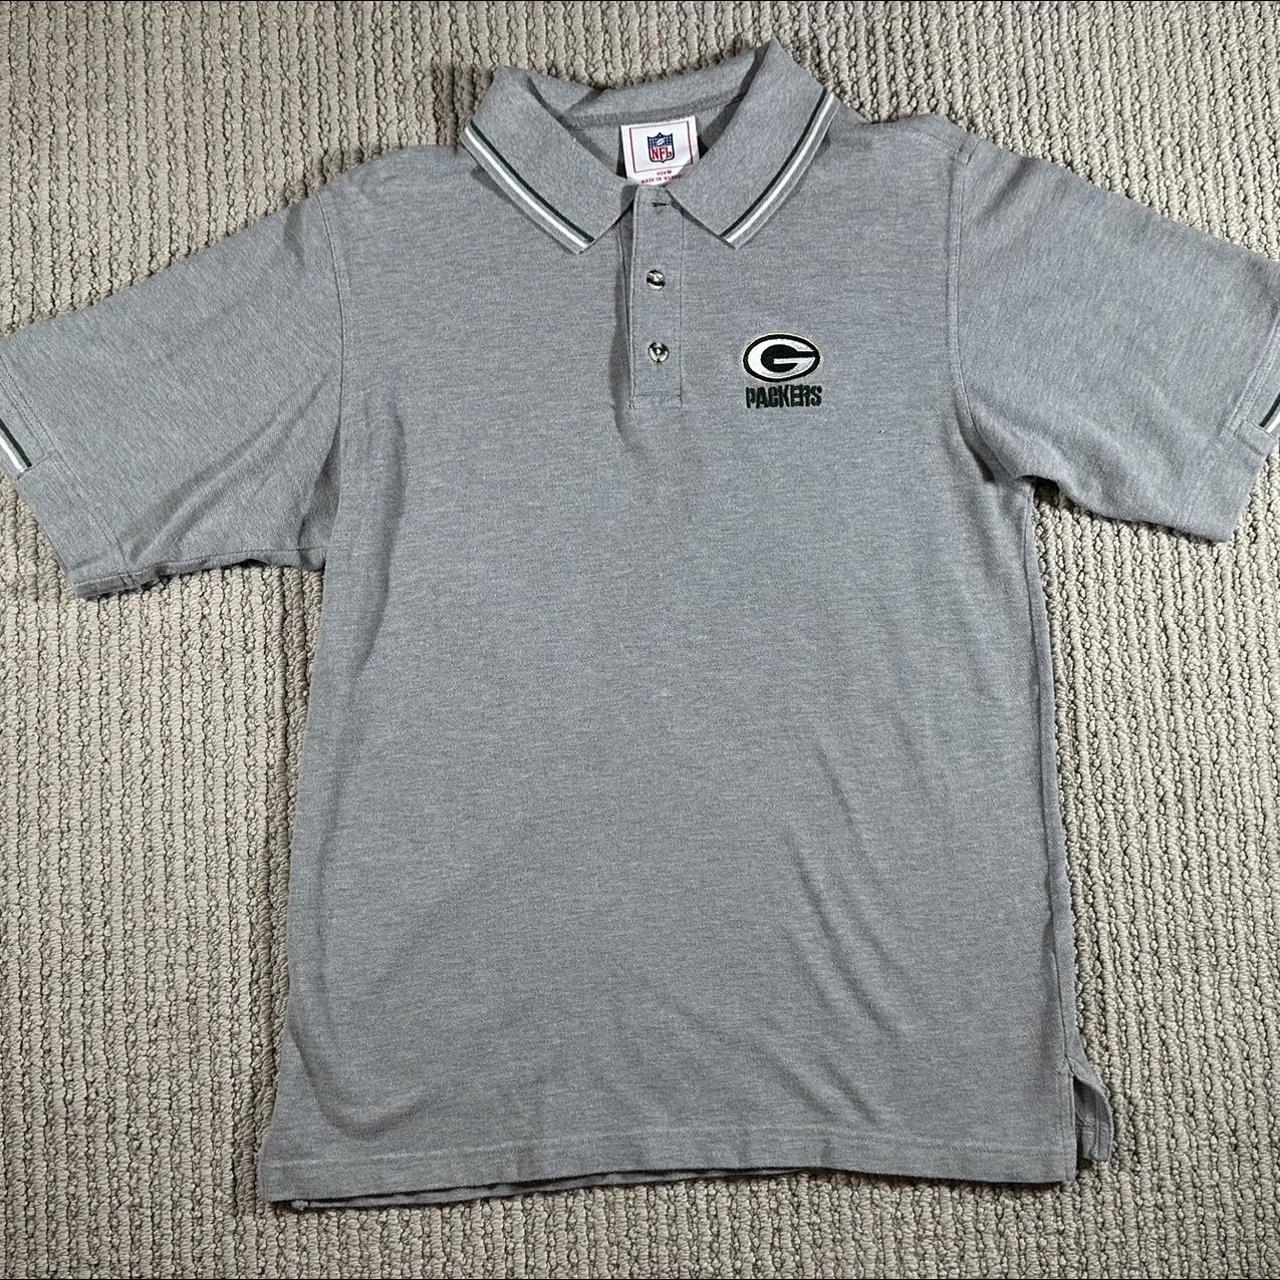 NFL Men's Polo Shirt - Grey - XL